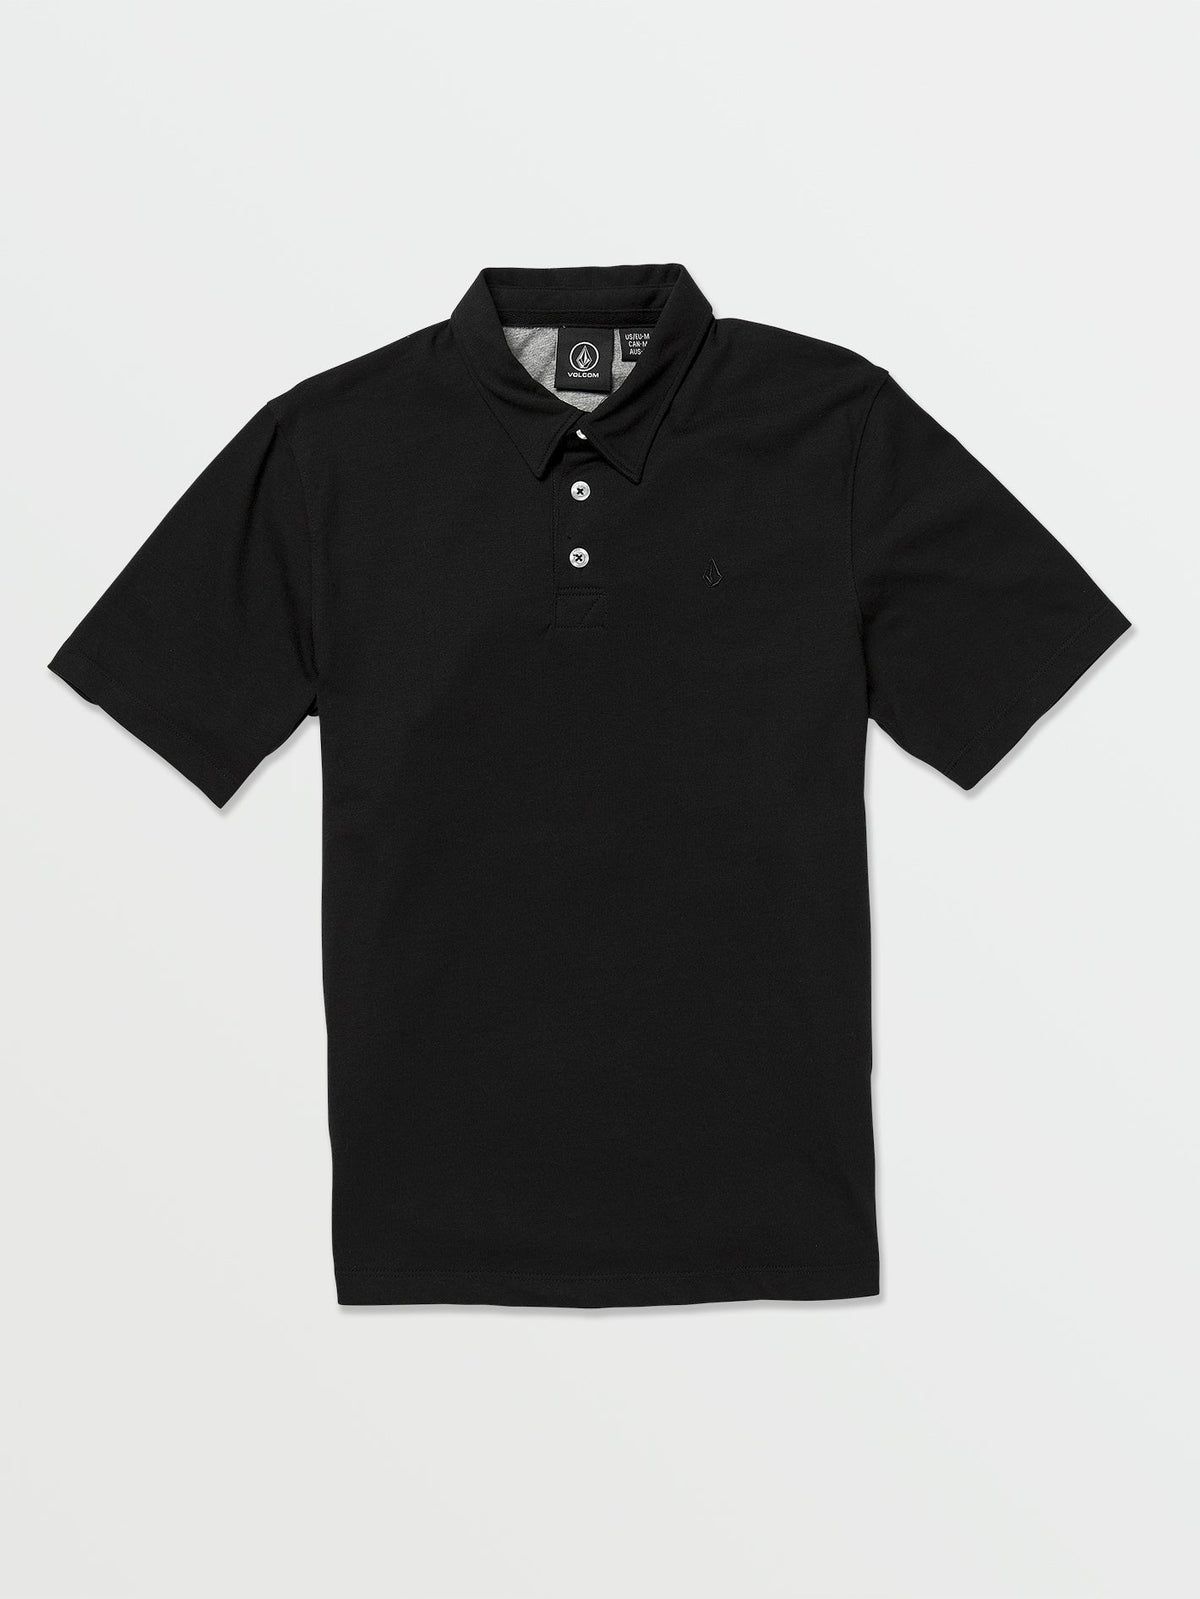 Volcom Wowzer Polo Boys Short Sleeve Shirt (Age 8-14) Black